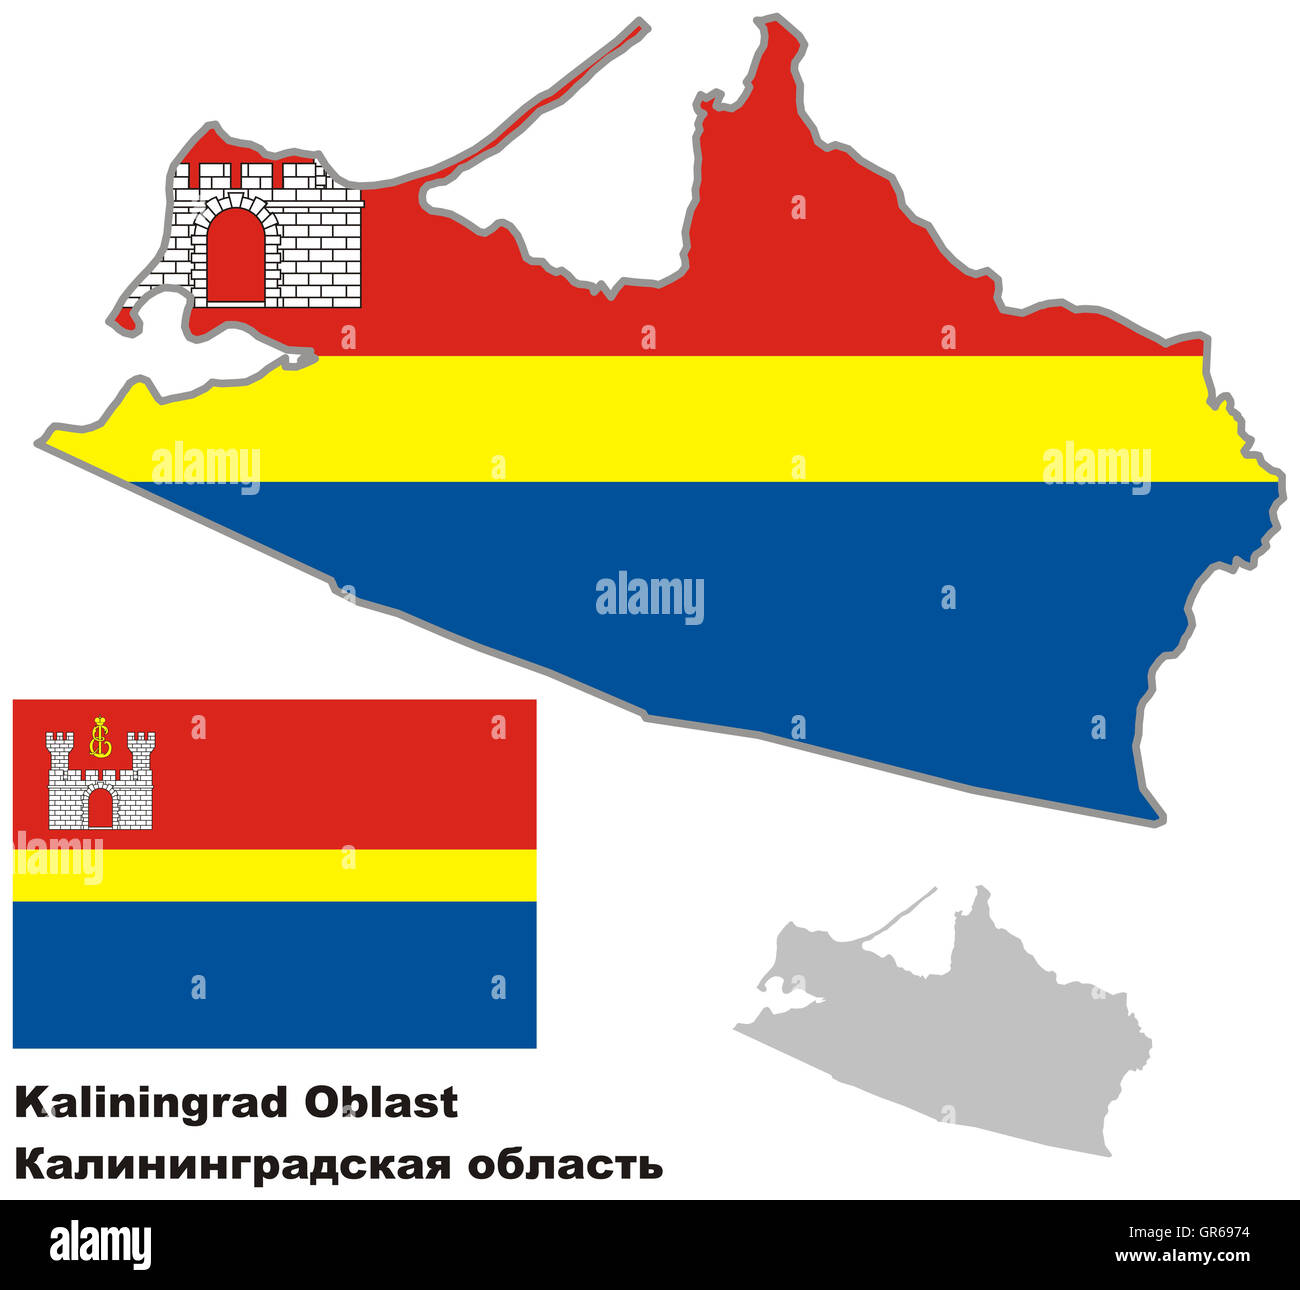 Der Umriß der Oblast Kaliningrad mit Flagge. Regionen der Russischen Föderation. Vektor-Illustration. Stockfoto